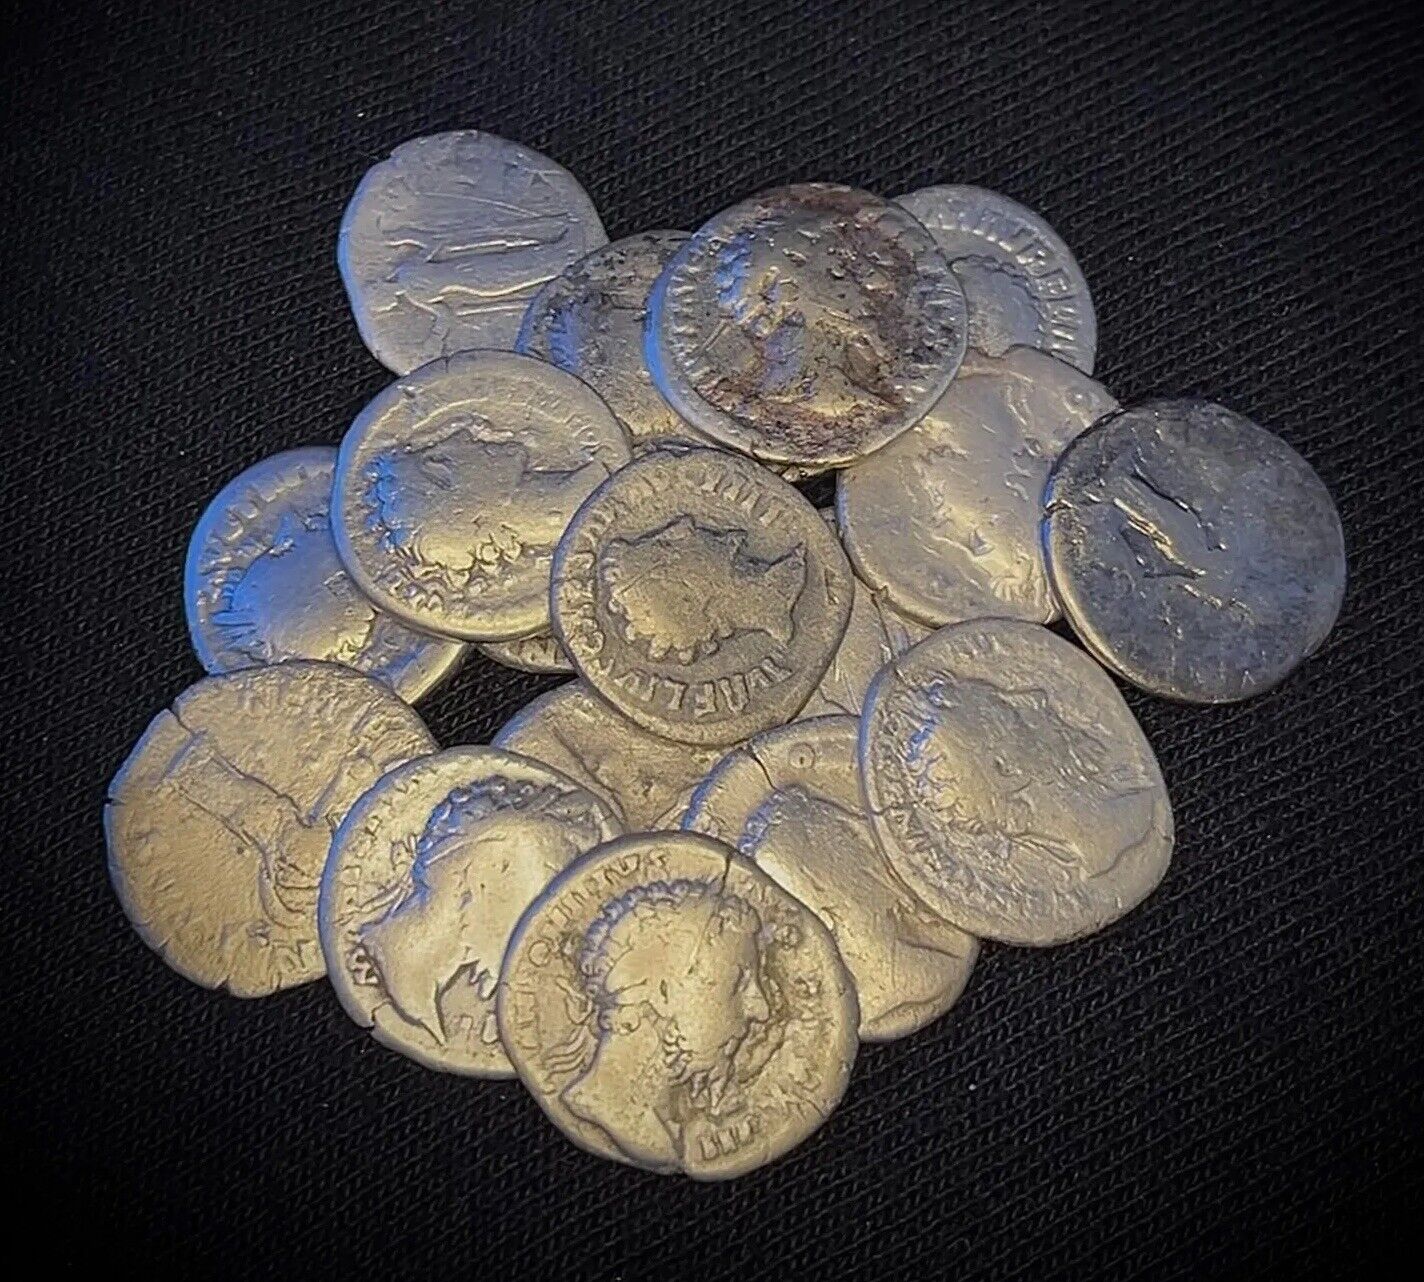 ONE QUALITY MARCUS AURELIUS SILVER ANCIENT ROMAN DENARIUS COIN - 1500+ YEARS OLD